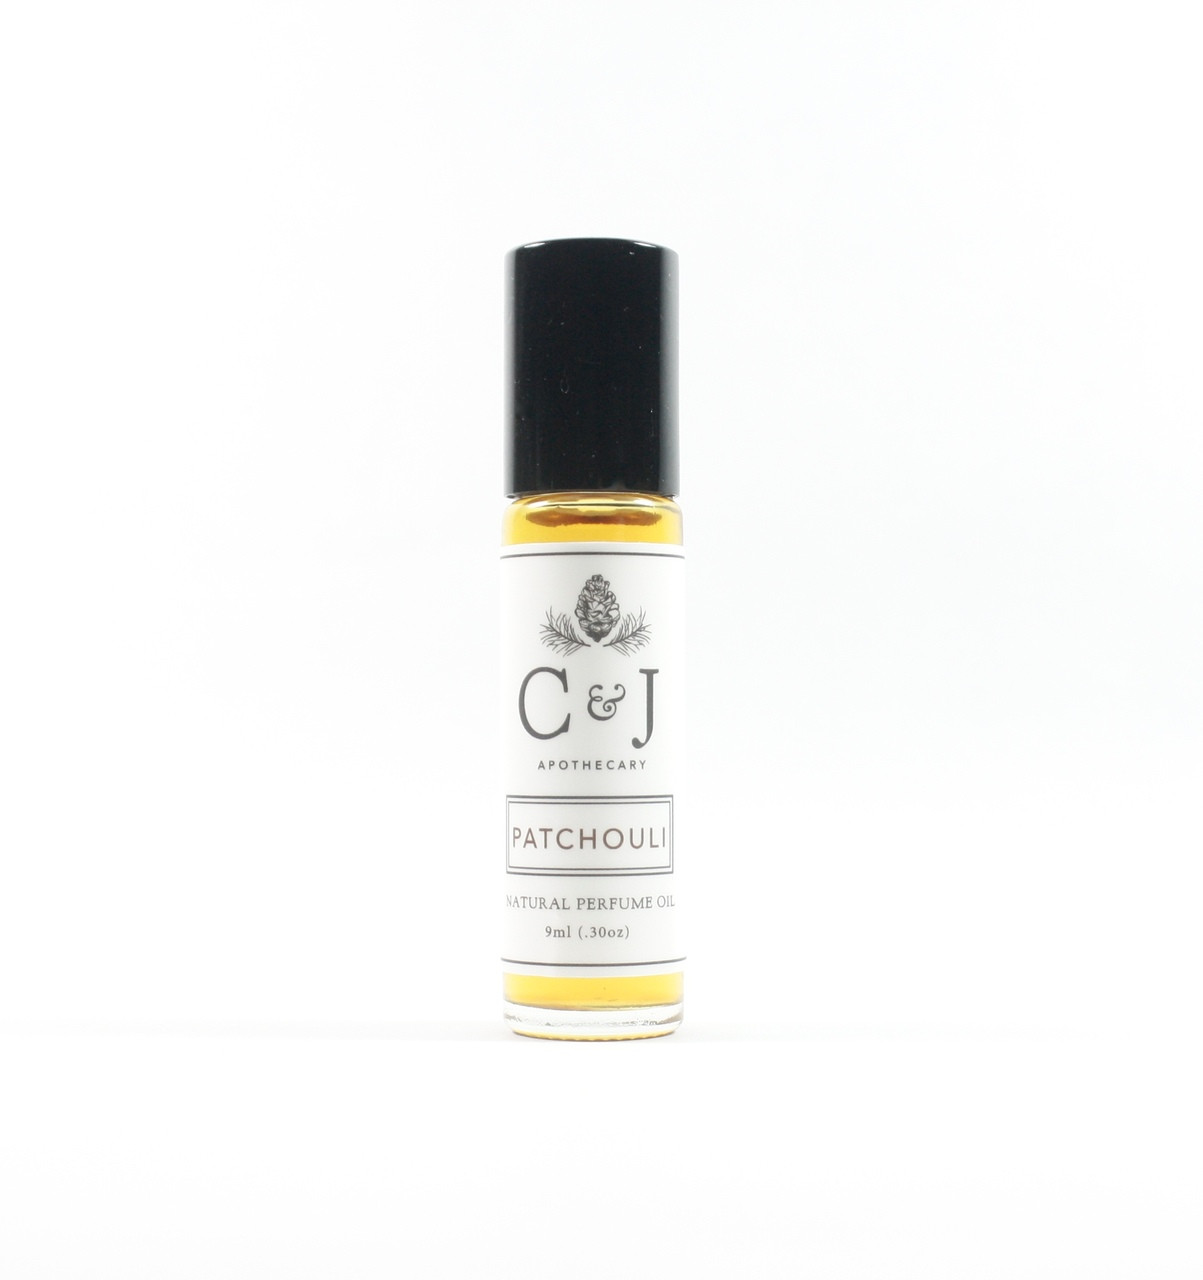 Patchouli Perfume Oil, Natural Perfume